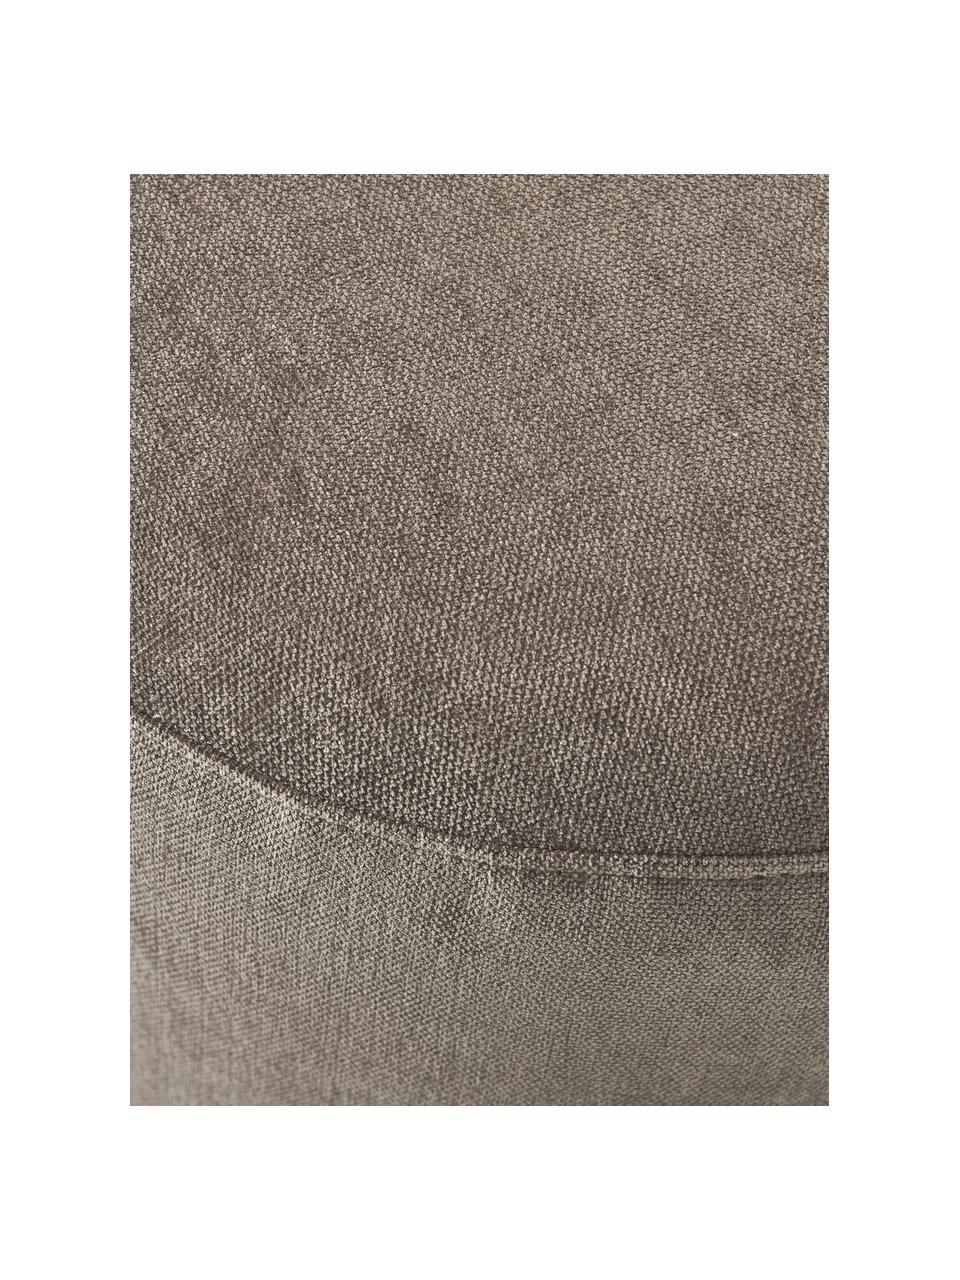 Taburete tapizado Lino, Tapizado: 100% poliéster Alta resis, Estructura: tablero de fibras de dens, Patas: metal cubierto, Tejido gris pardo, Ø 46 x Al 45 cm